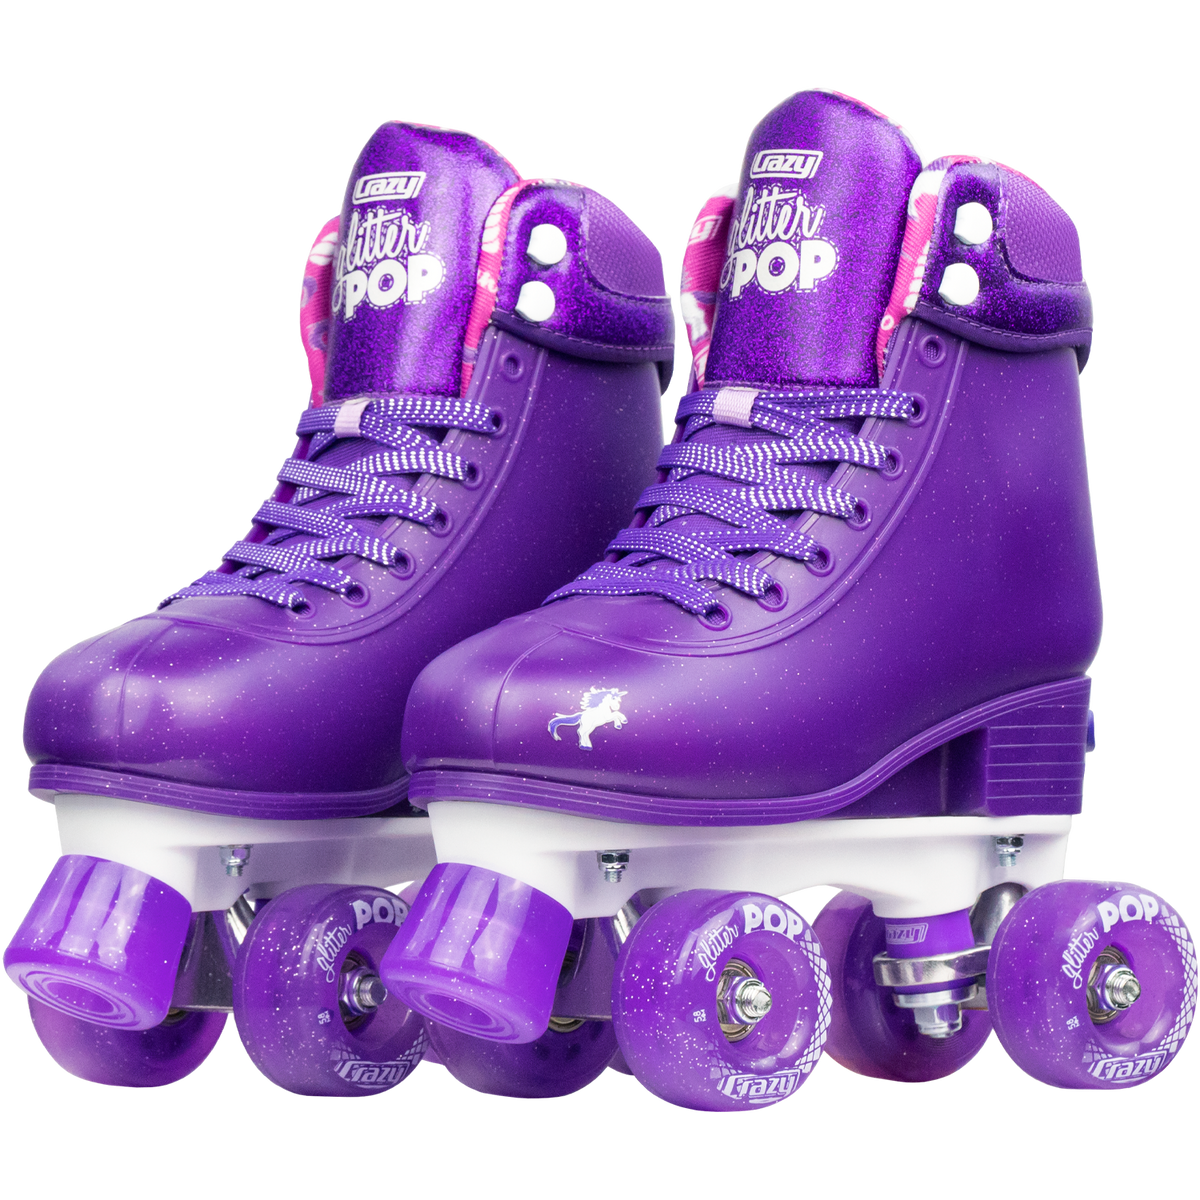 crazy-glitter-pop-roller-skates-purple-skate-society